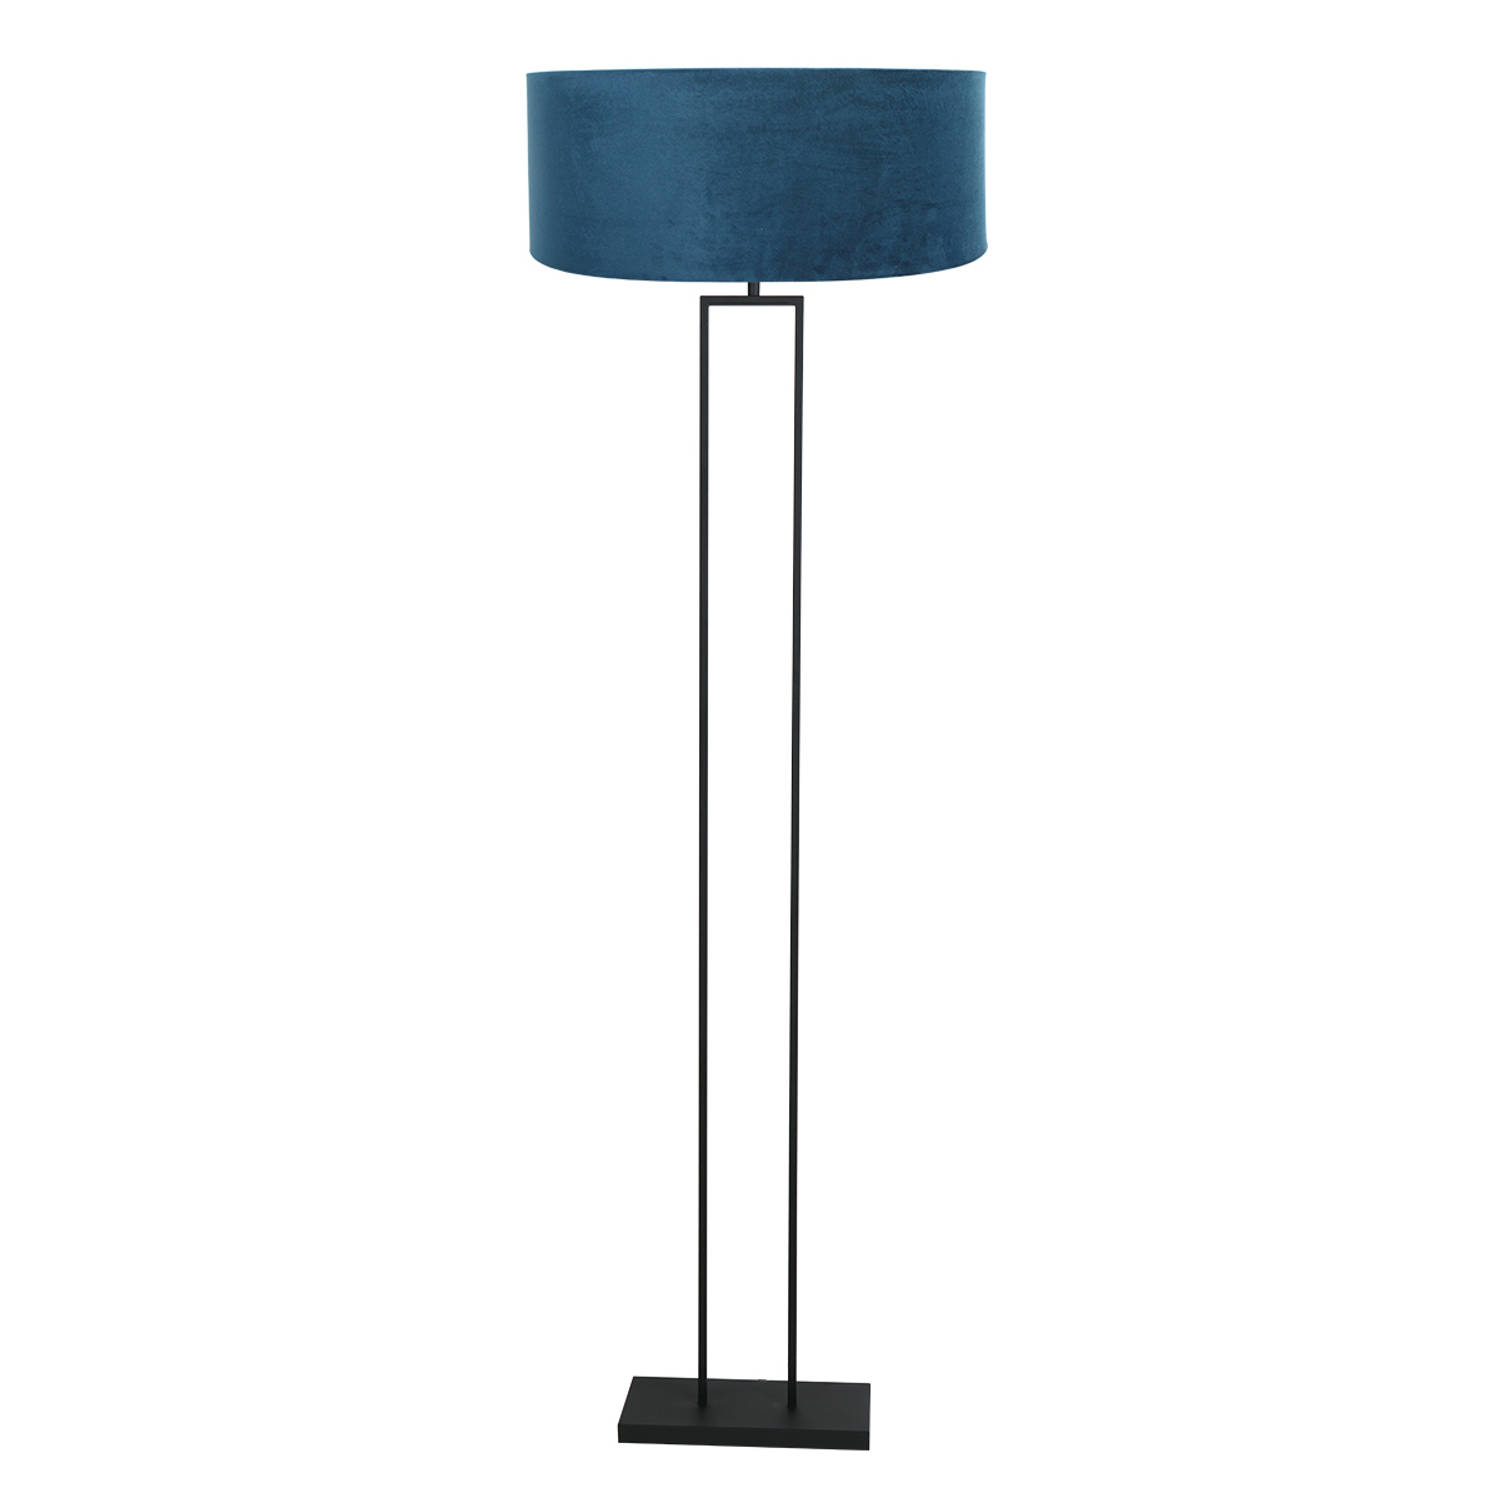 Vloerlamp Stang | 1-lichts | blauw / zwart | E27 fitting | modern design | woonkamer / slaapkamer | versier je interieur